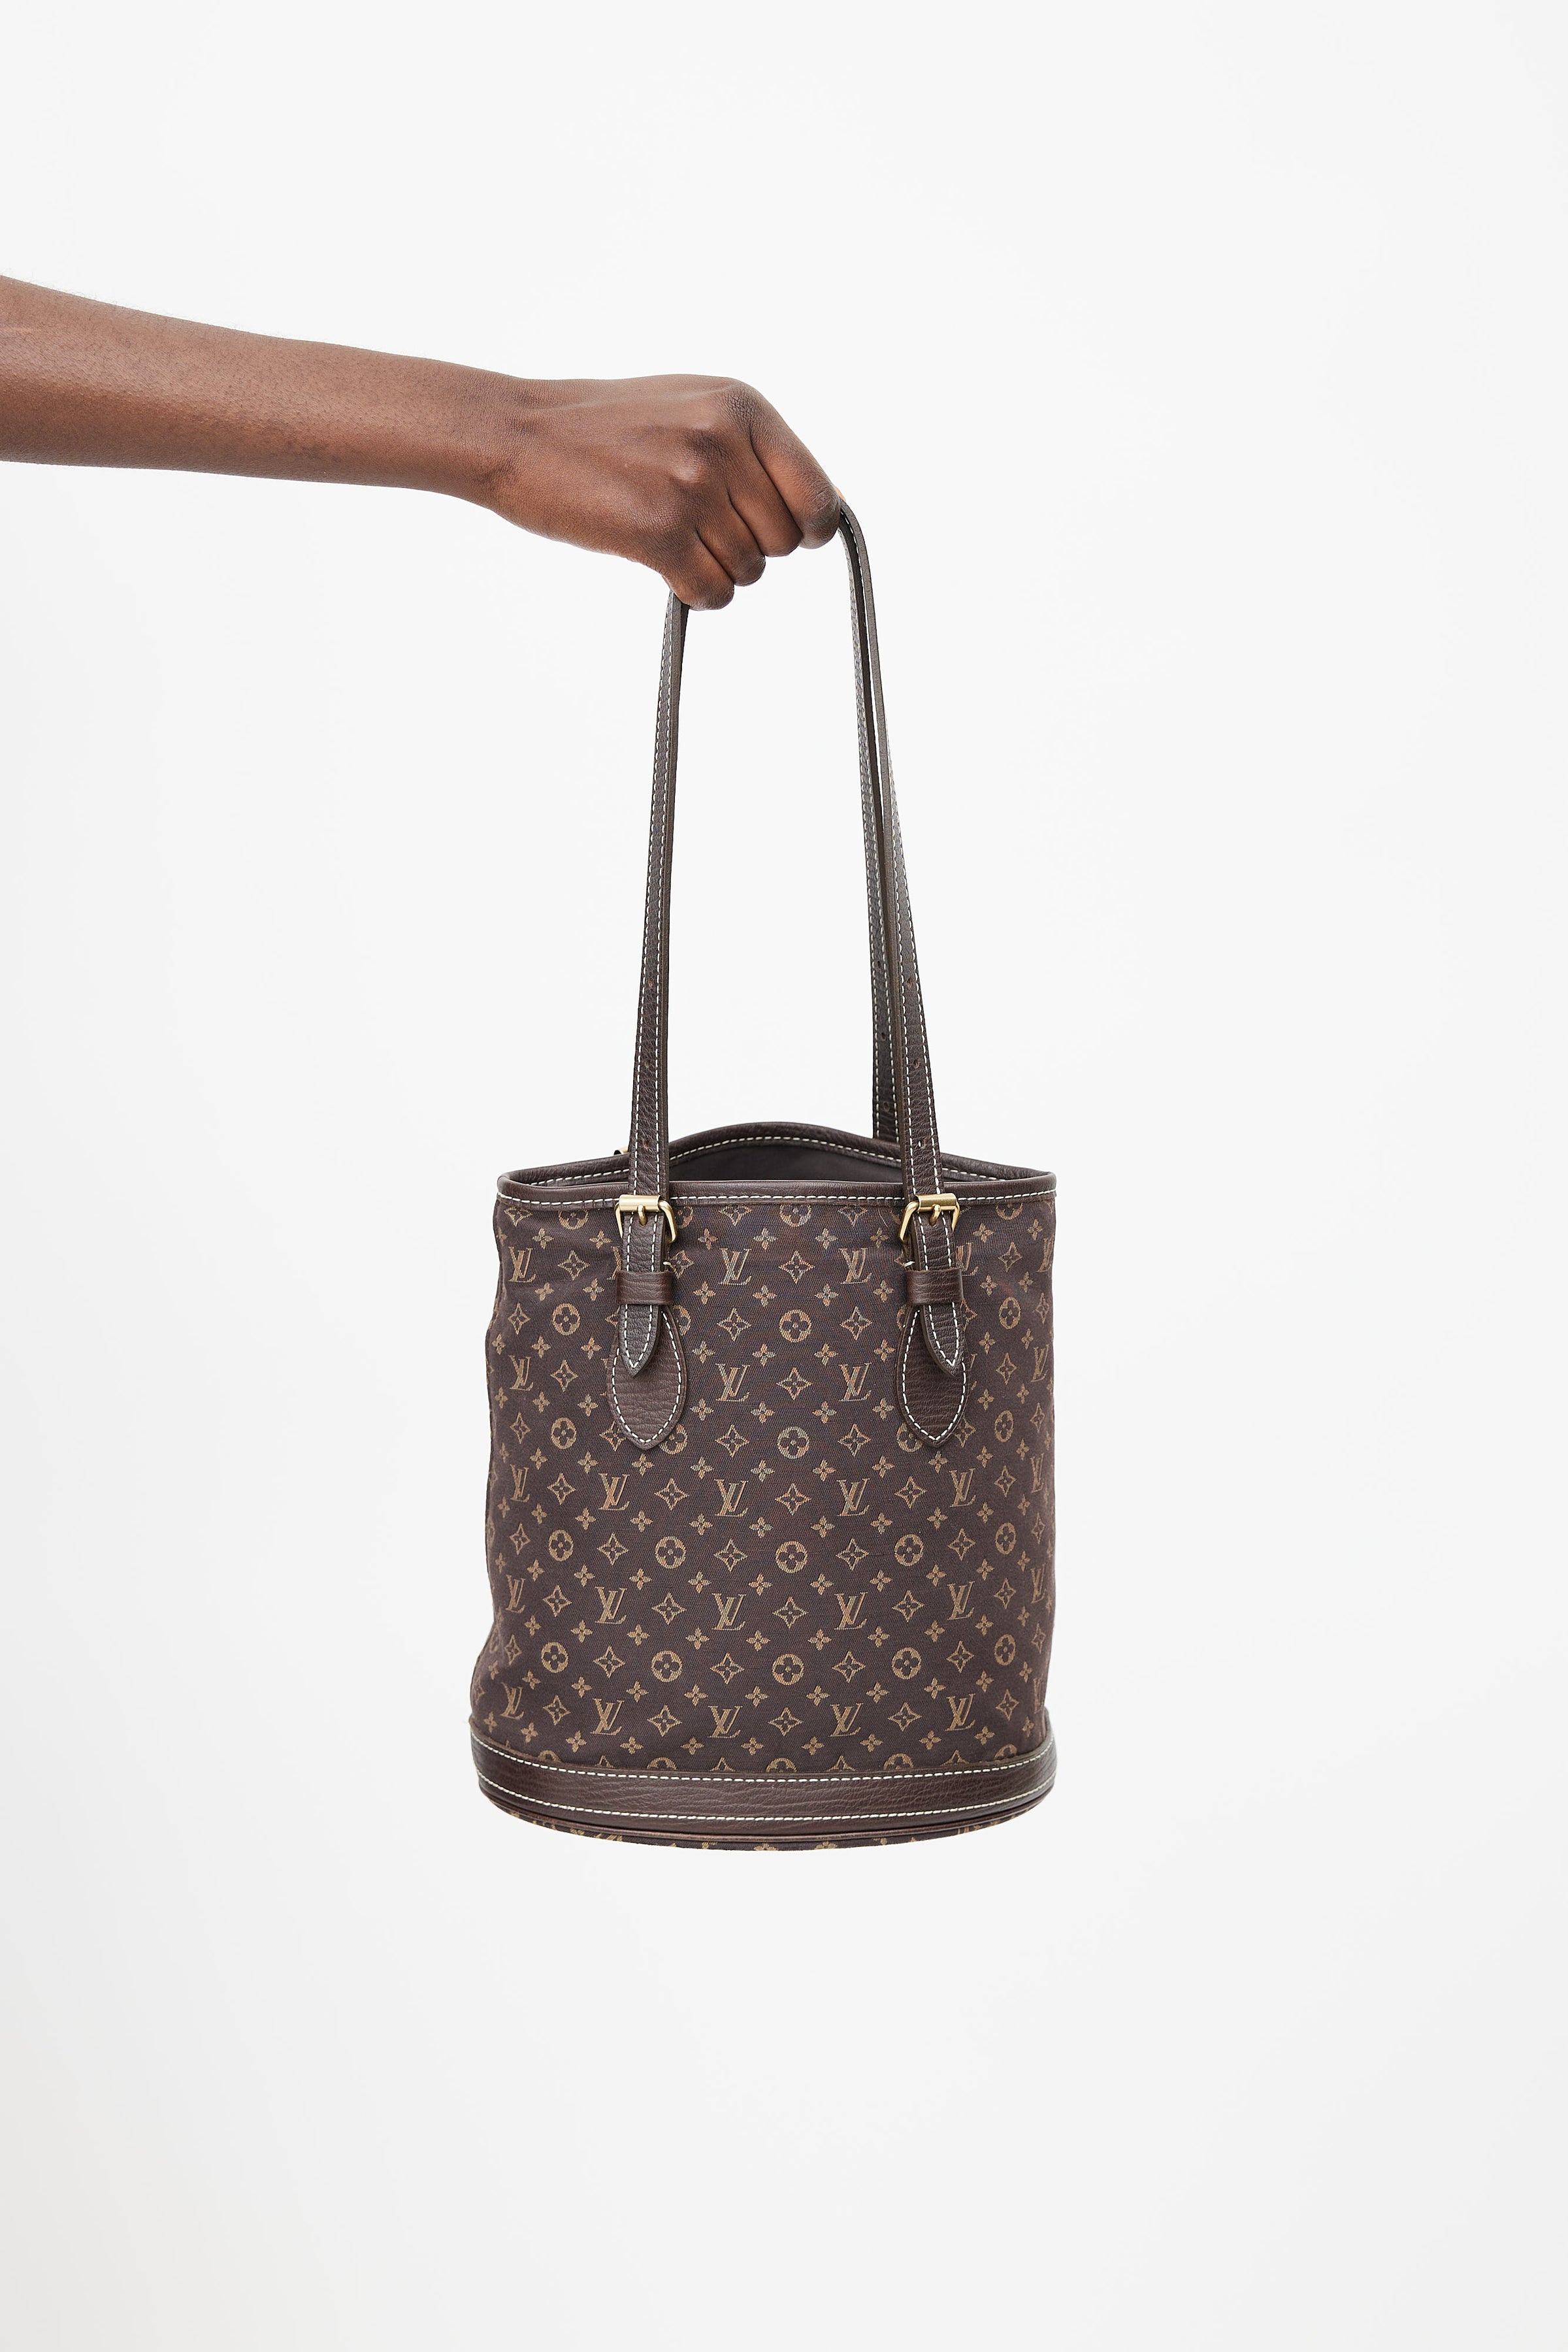 Louis Vuitton Petite Bucket Monogram - Luxury Helsinki